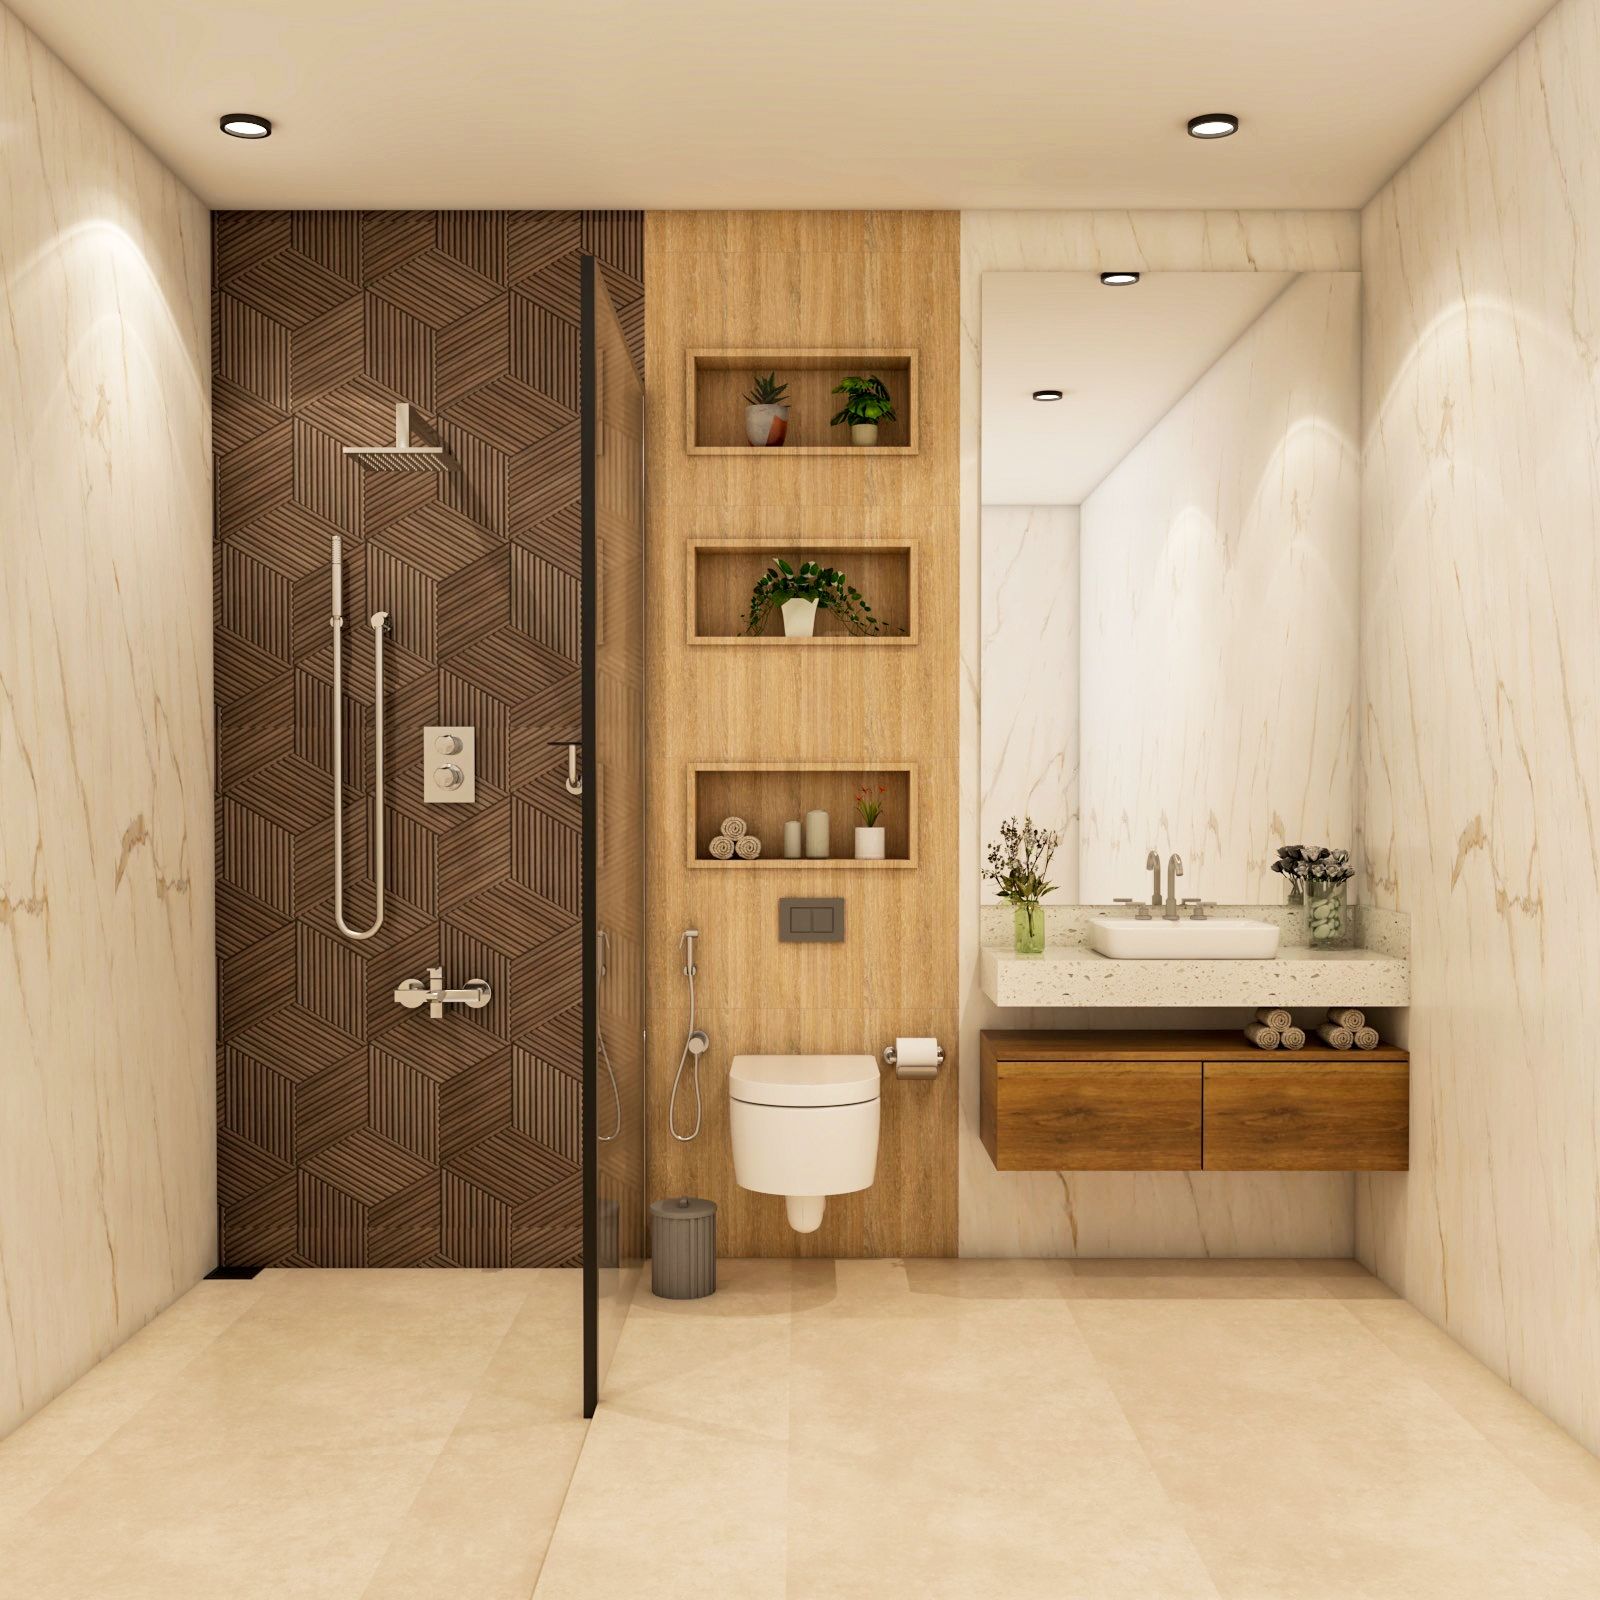 Contemporary Beige And Brown Bathroom Interior Design